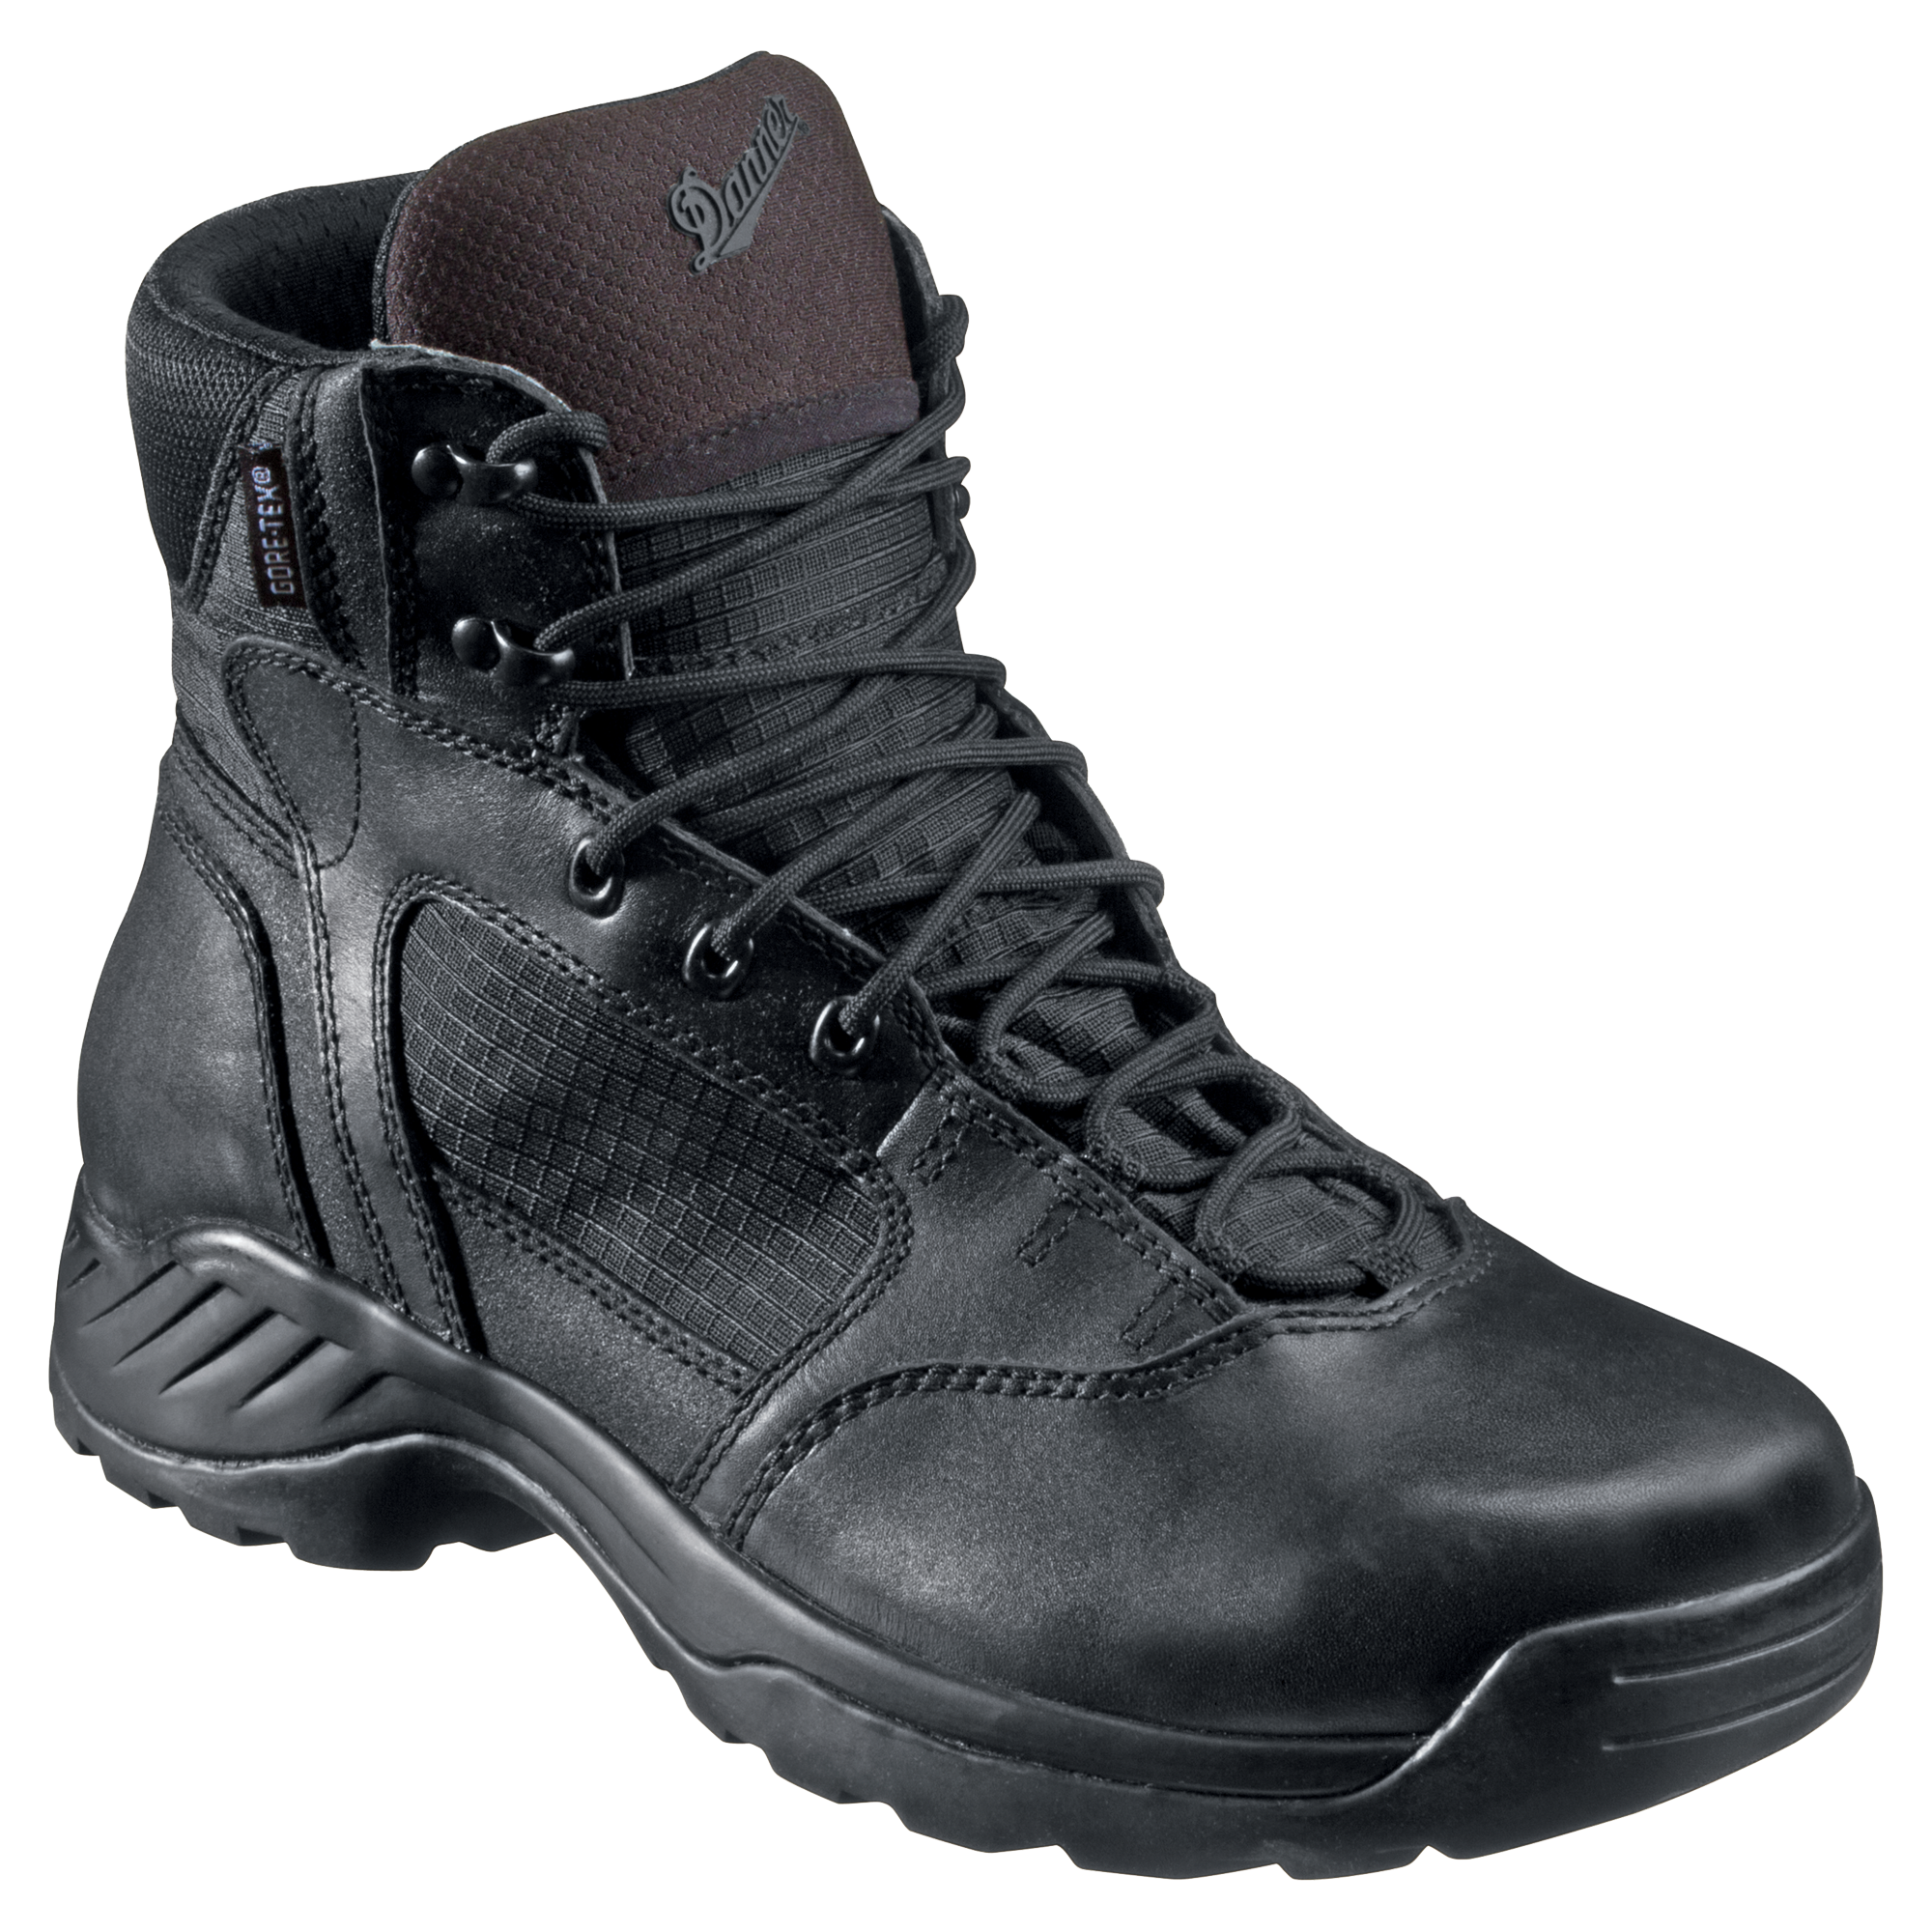 Danner Kinetic GTX 6'' Side-Zip Waterproof Tactical Duty Boots for Men - Black - 6.5W